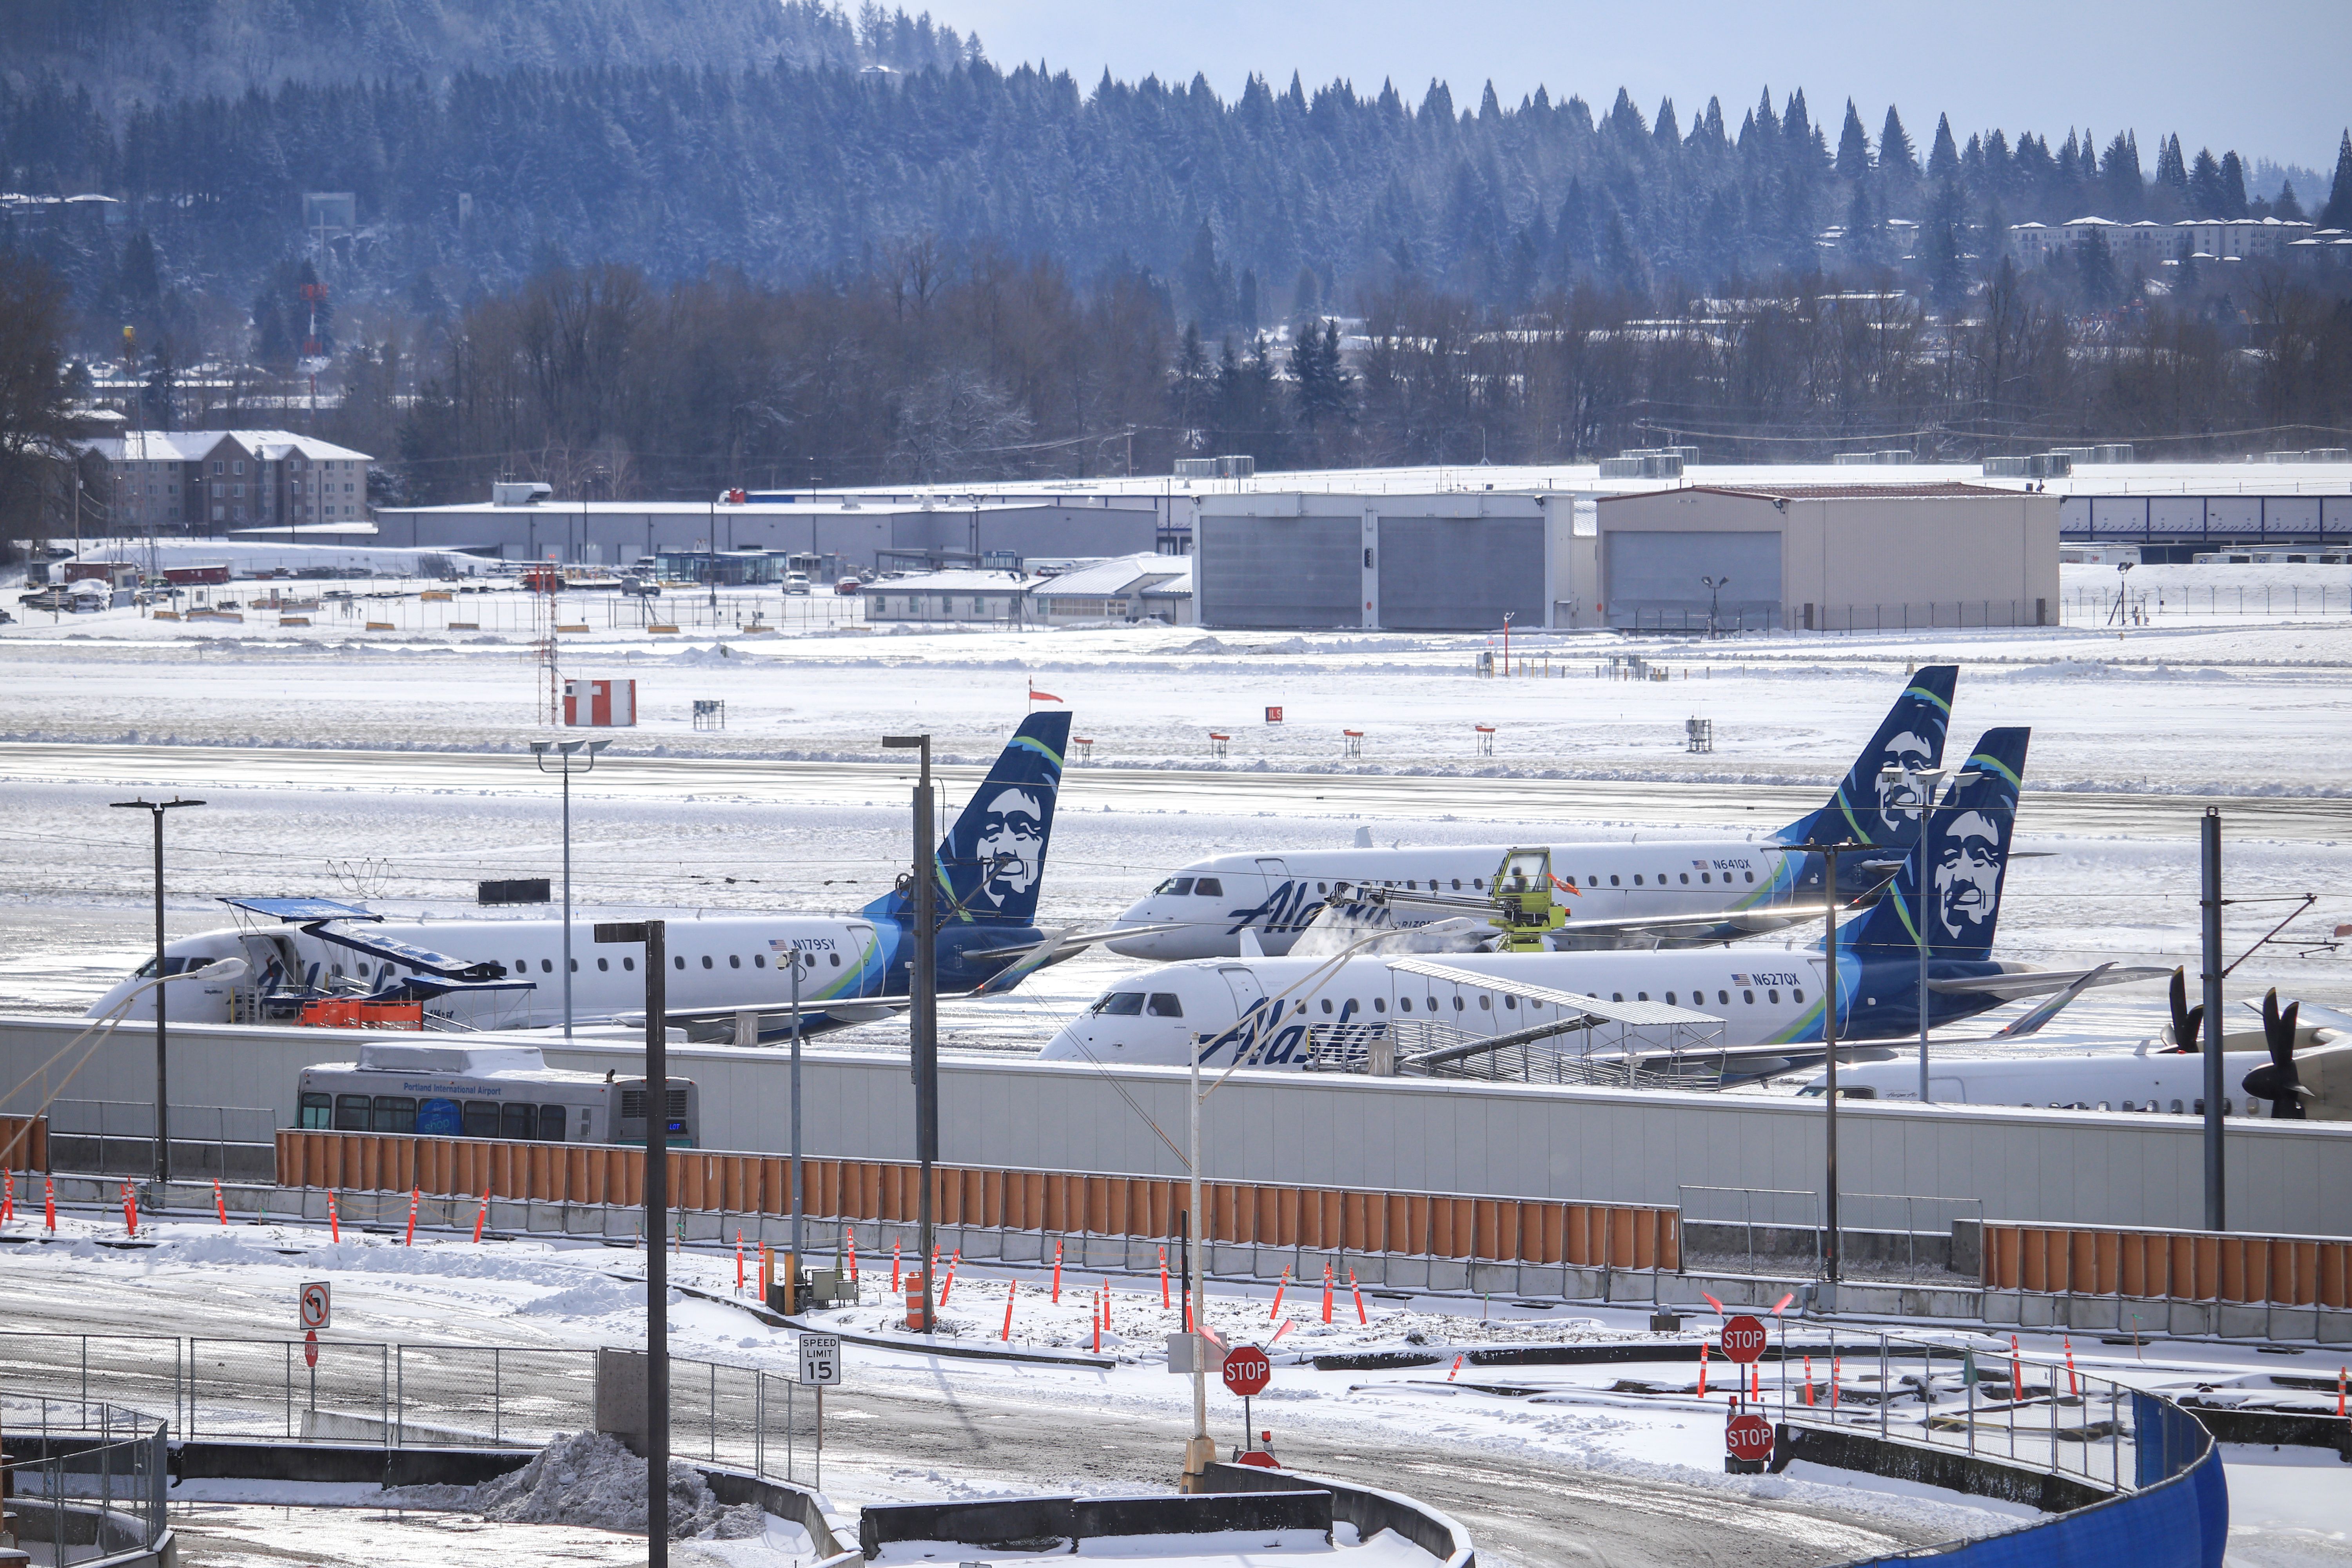 Three Alaska Airlines/Horizon Air aircraft on the apron at Portland International Airport.